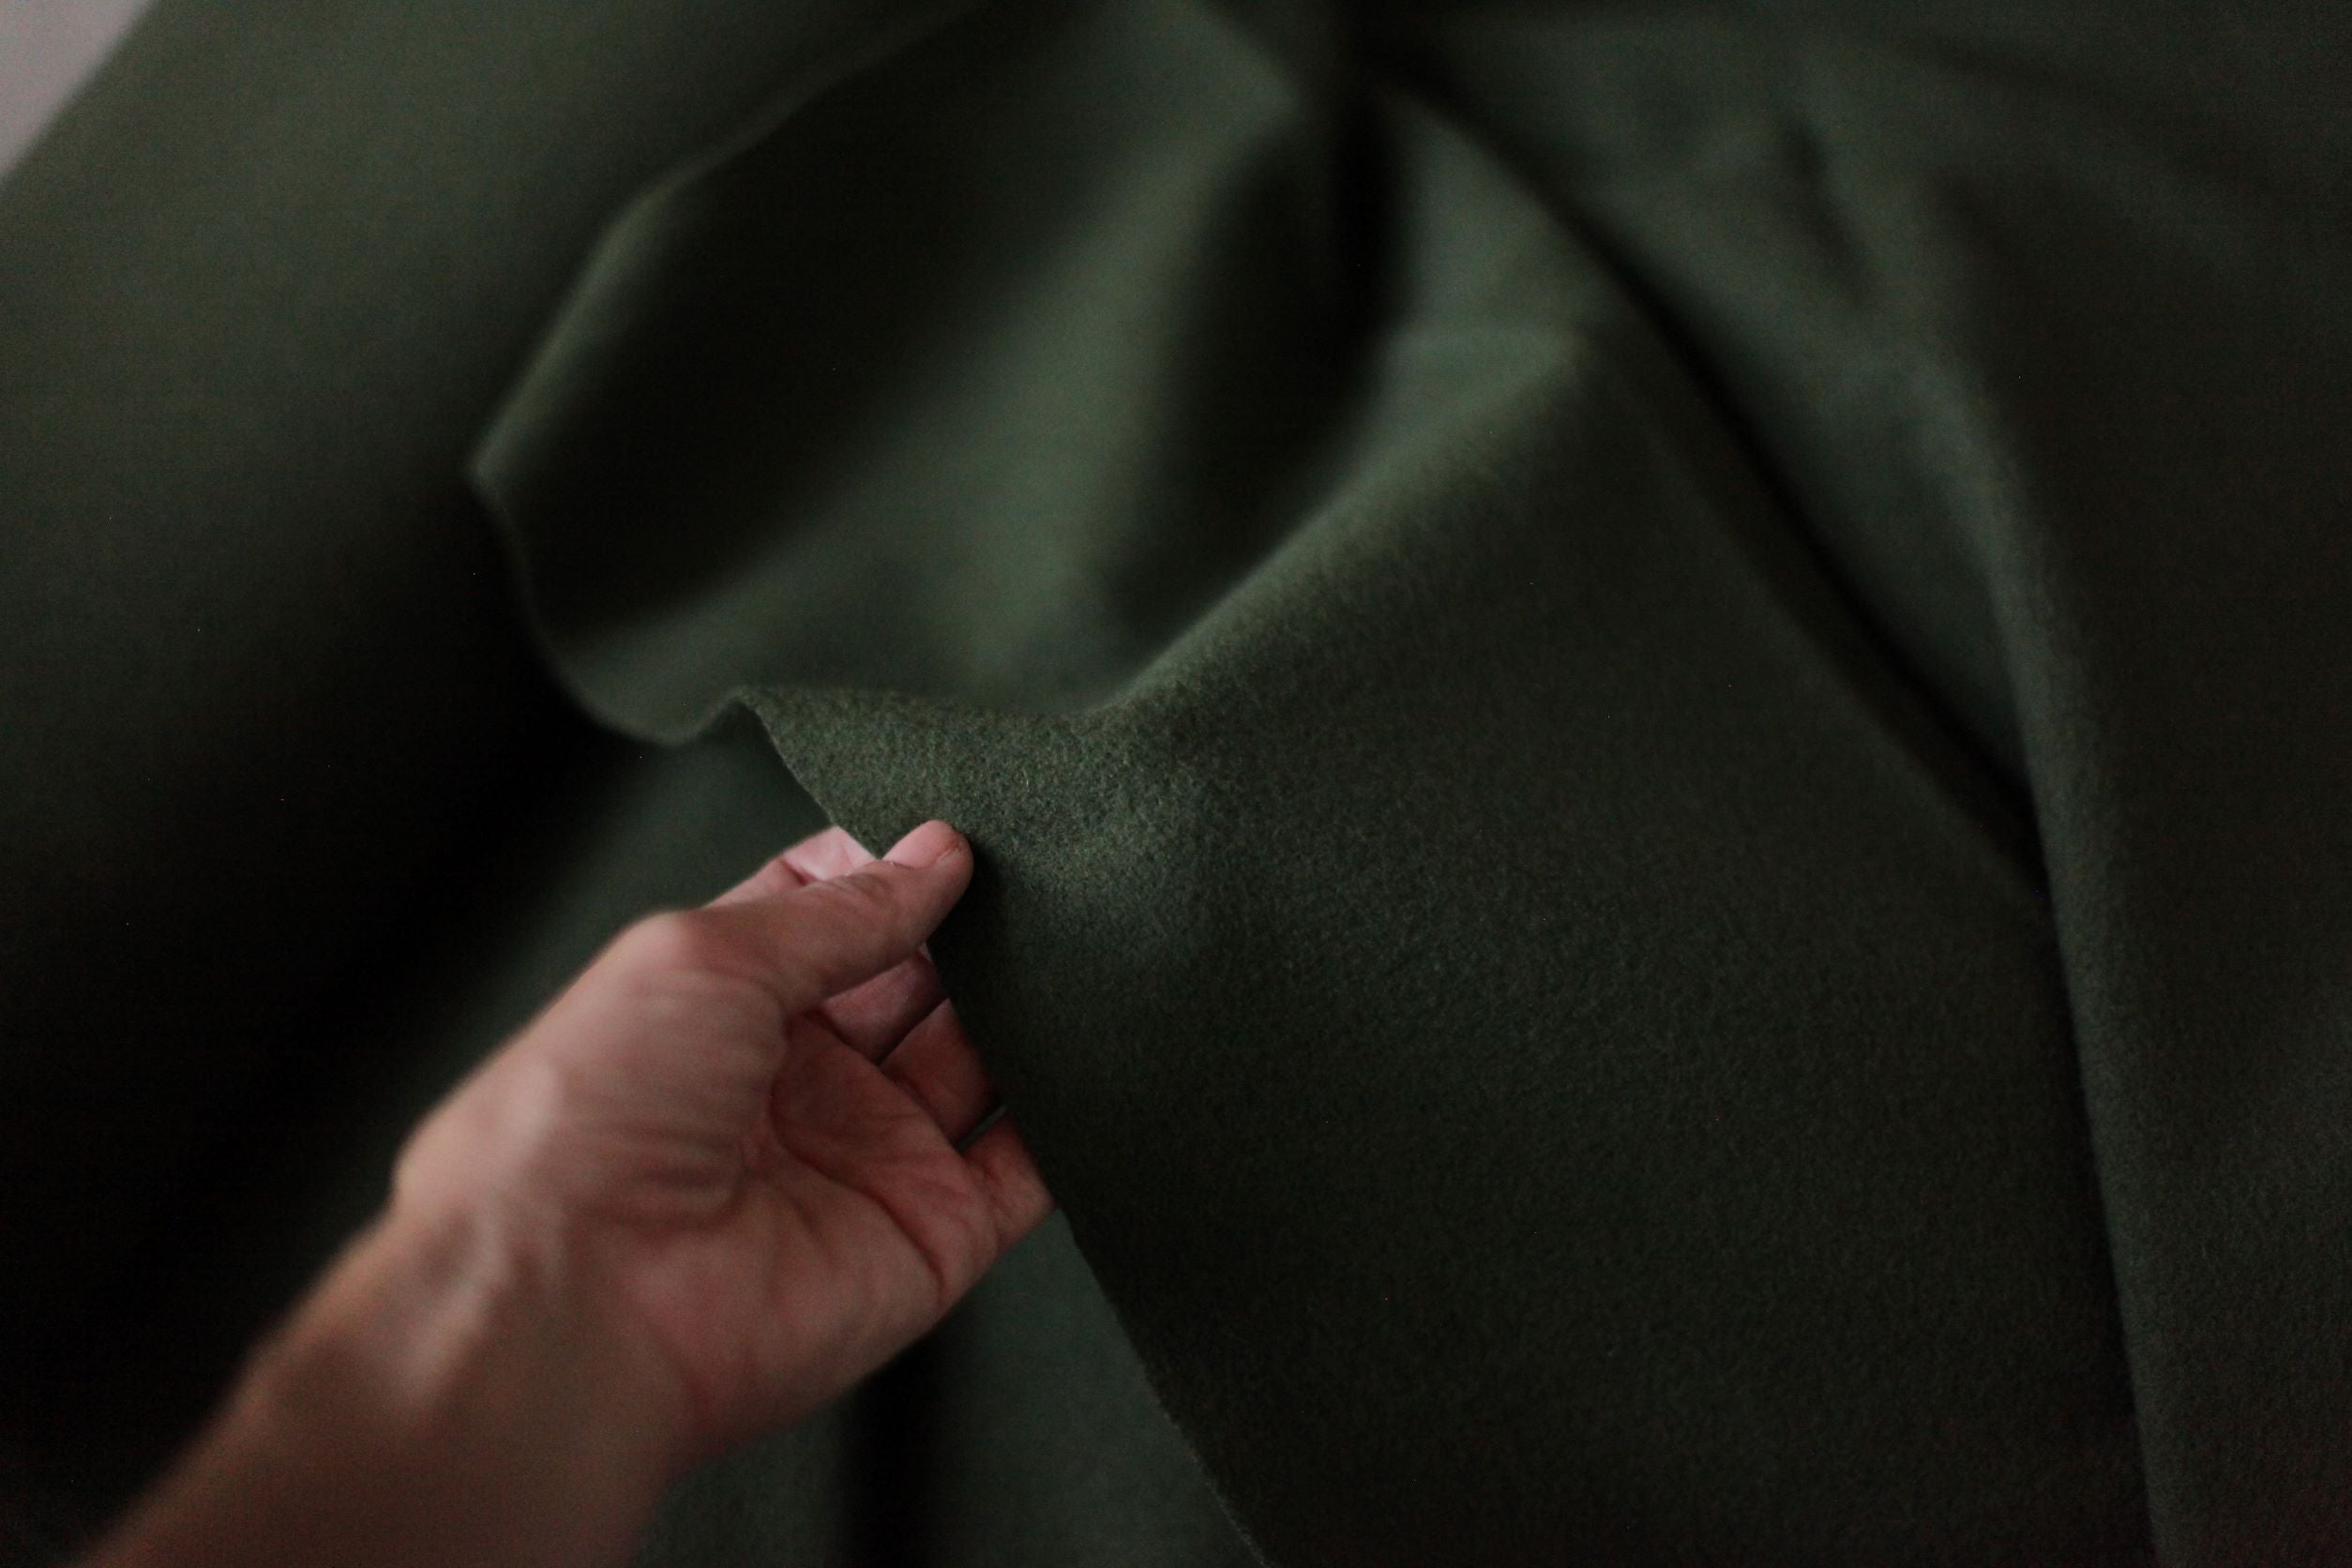 Wool Fabric By The Yard - 51 - Green, White, & Black 1 Buffalo